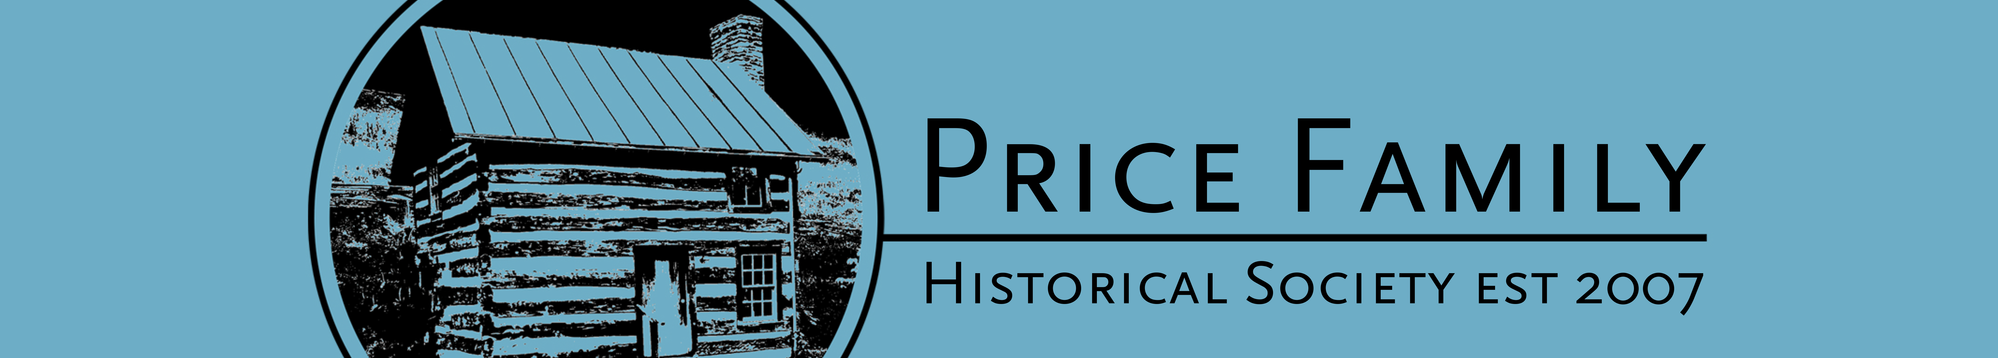 Price Family Historical Society